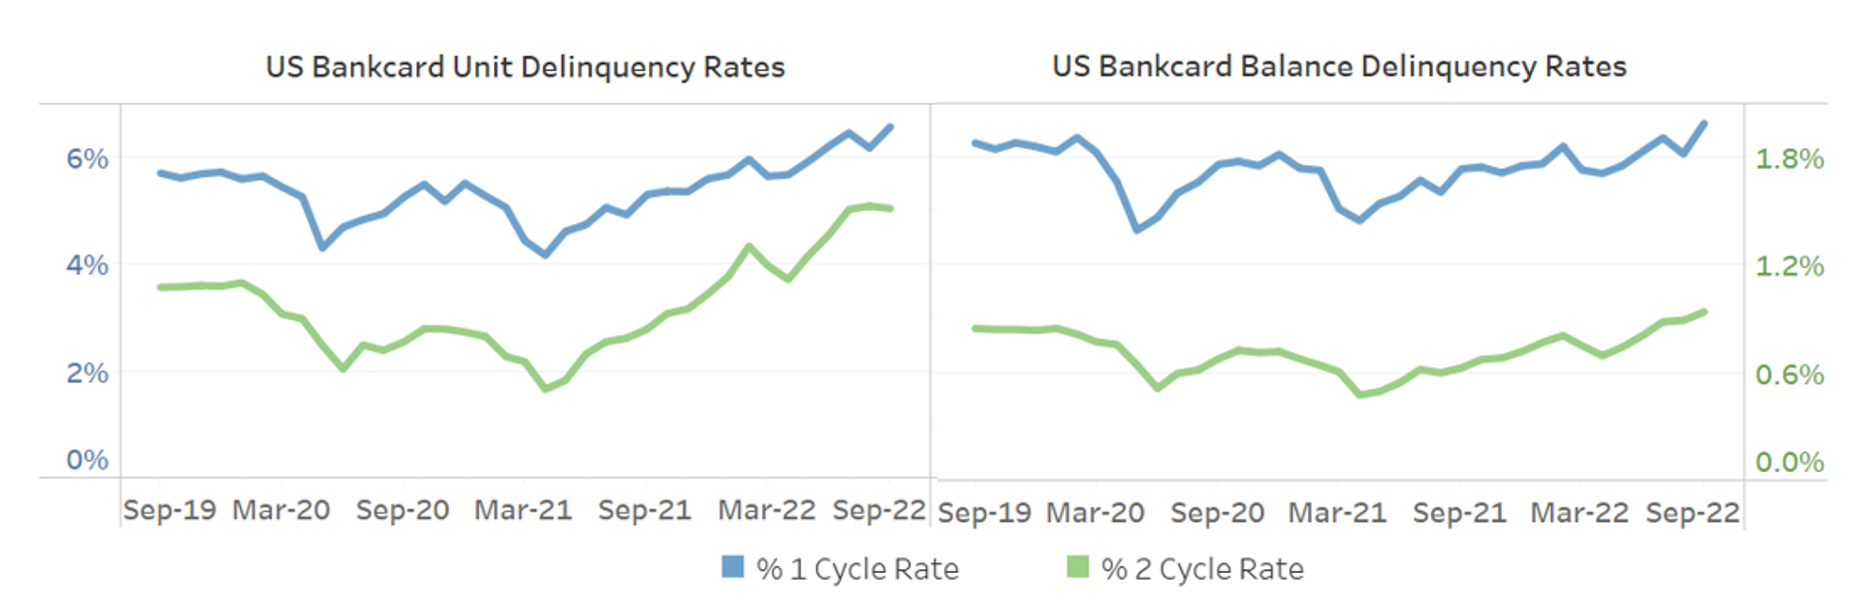 US Bankcard Delinquency Rates